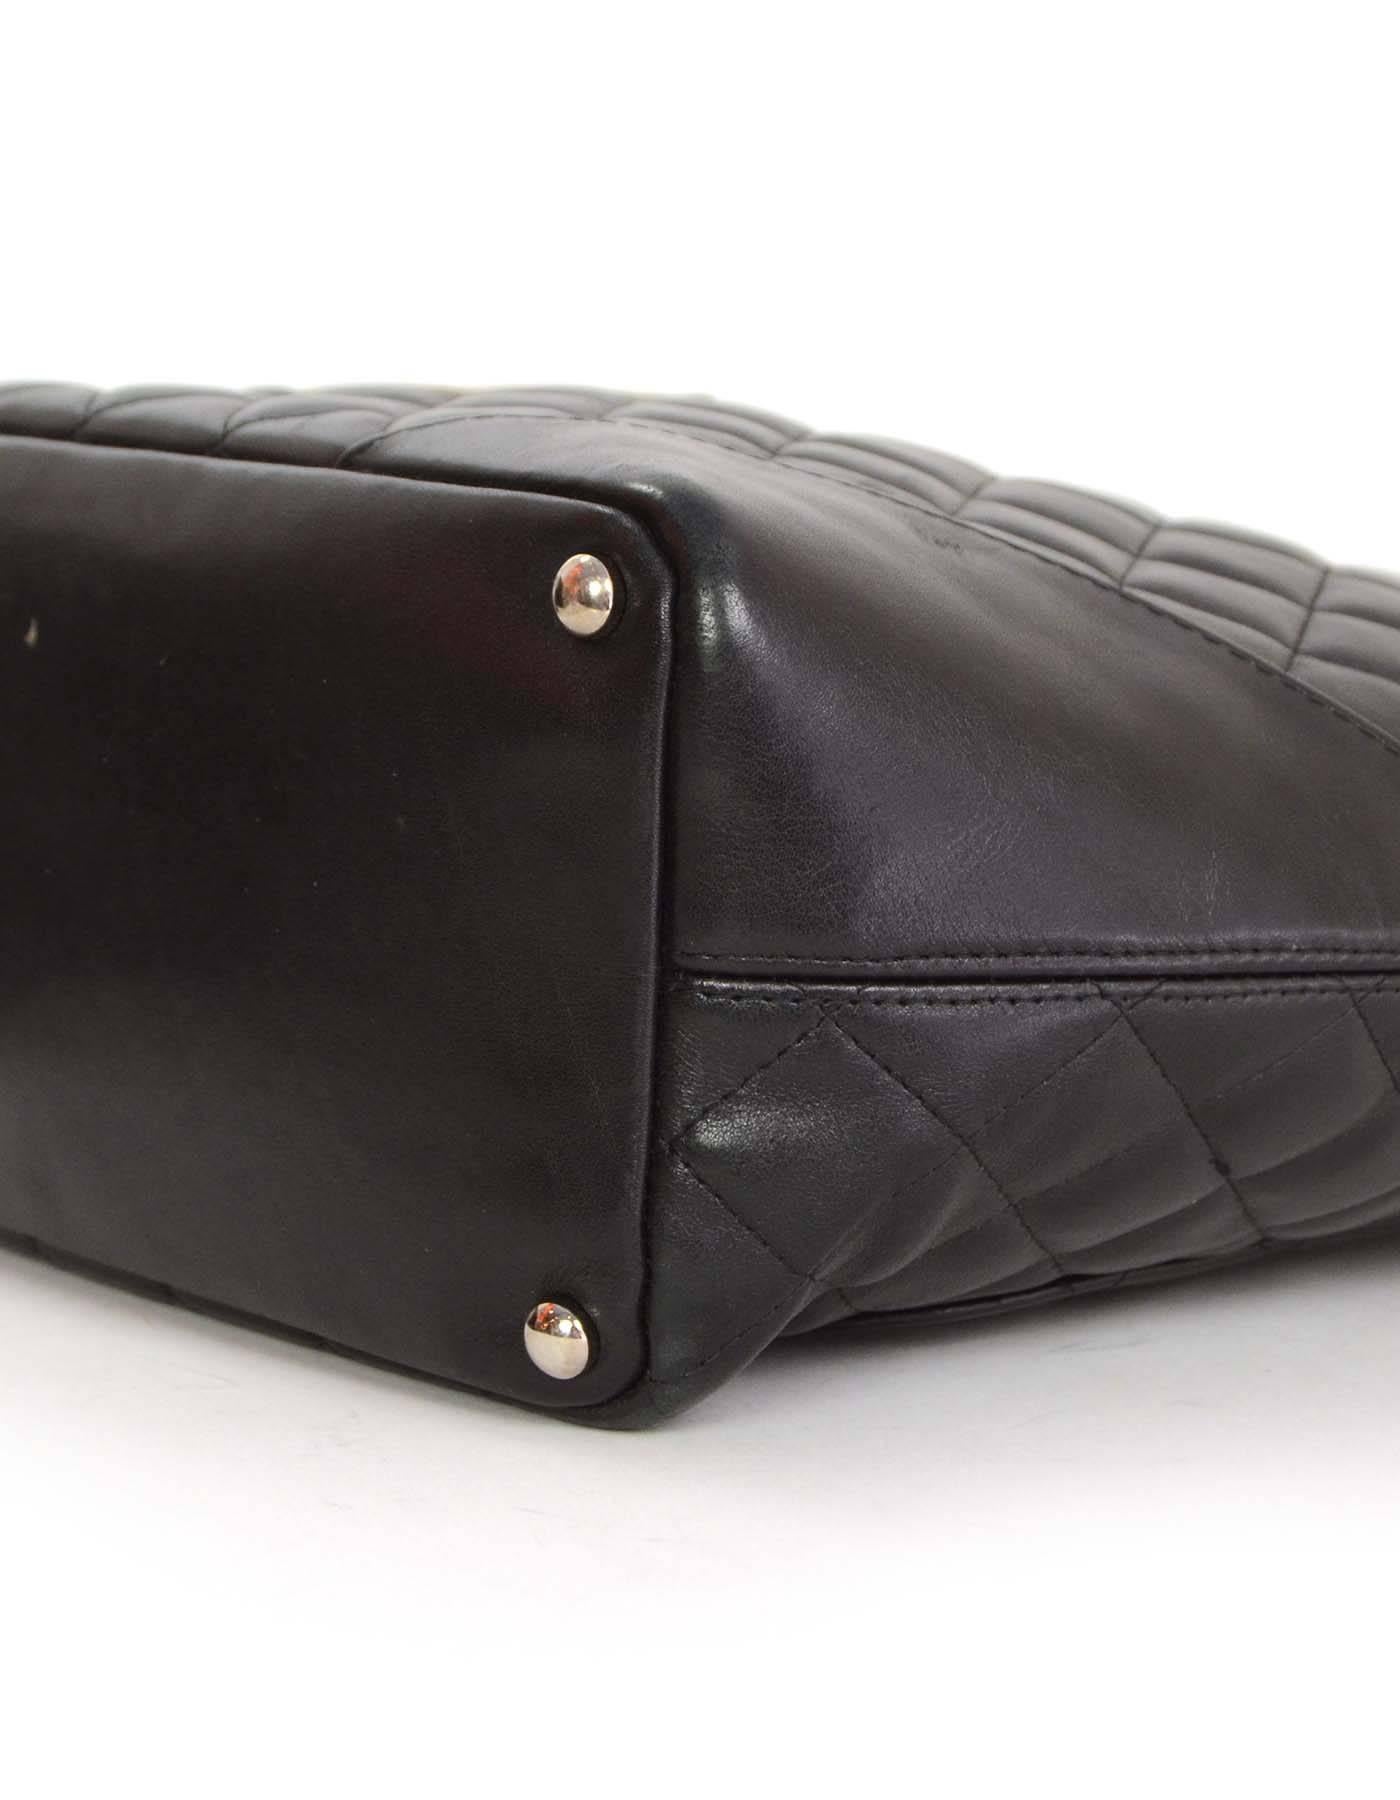 Chanel Black & White Leather Cambon Tote Bag SHW 2